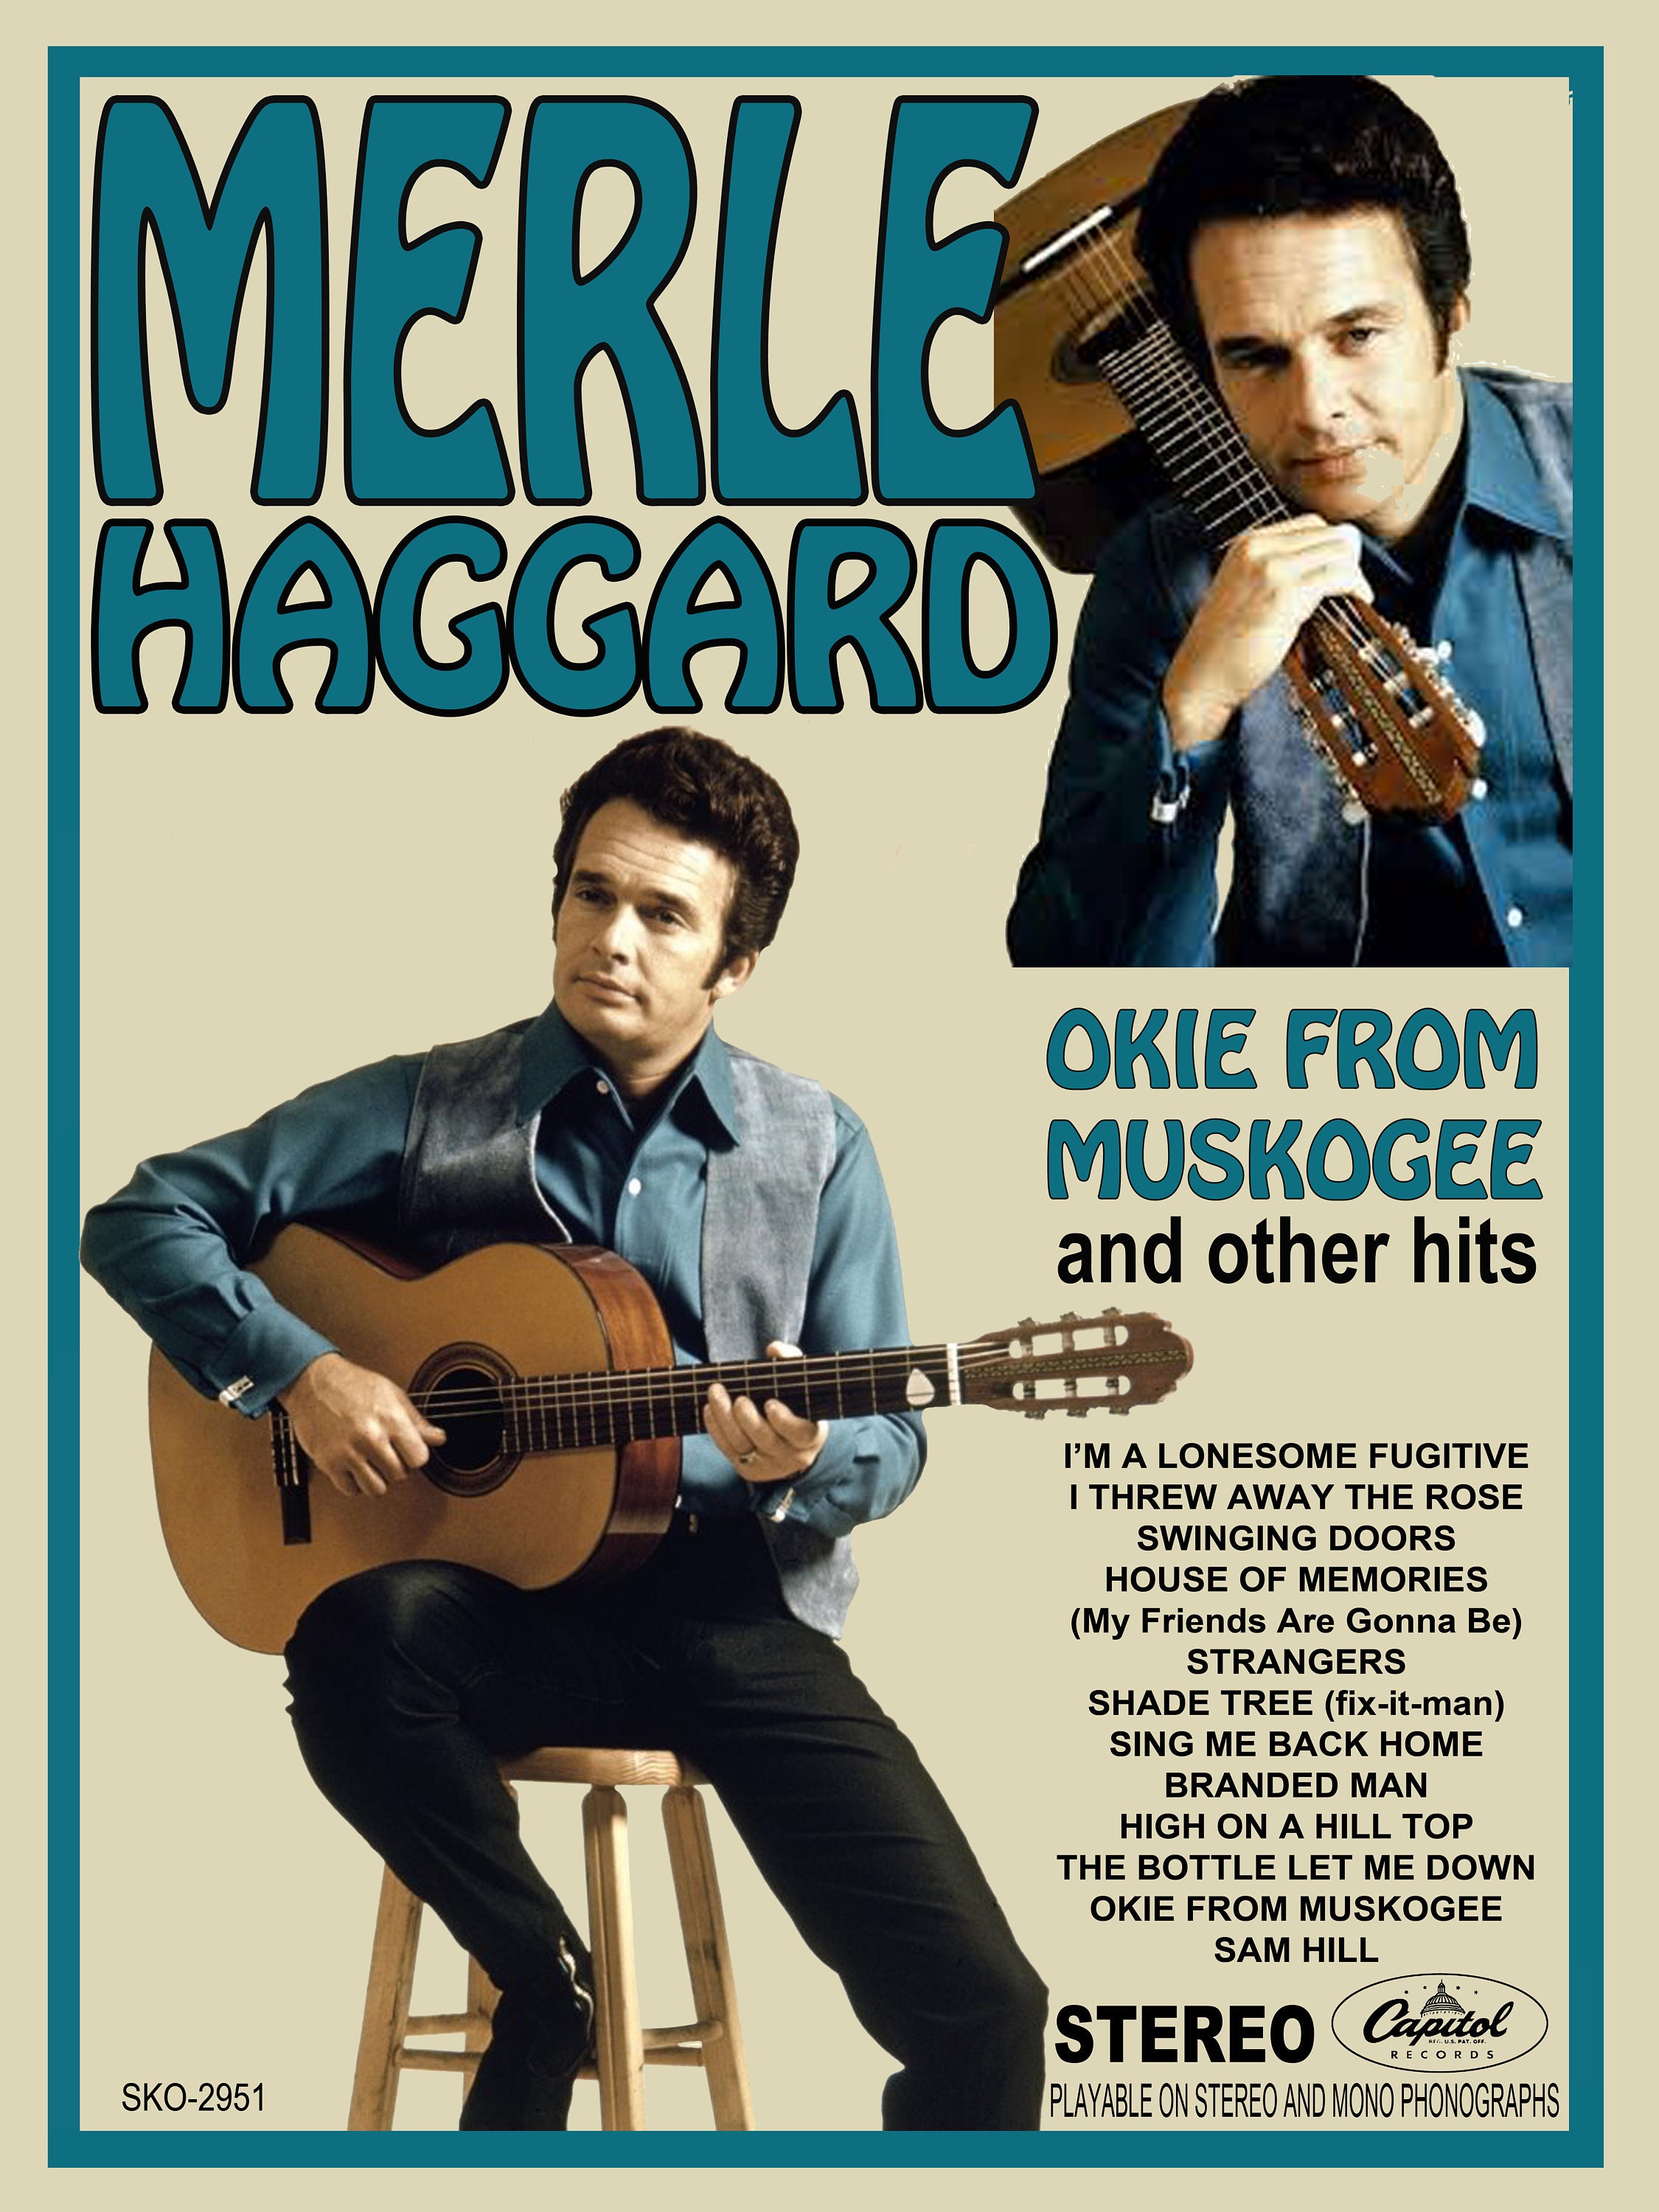 Merle Haggard Promo Poster - Etsy